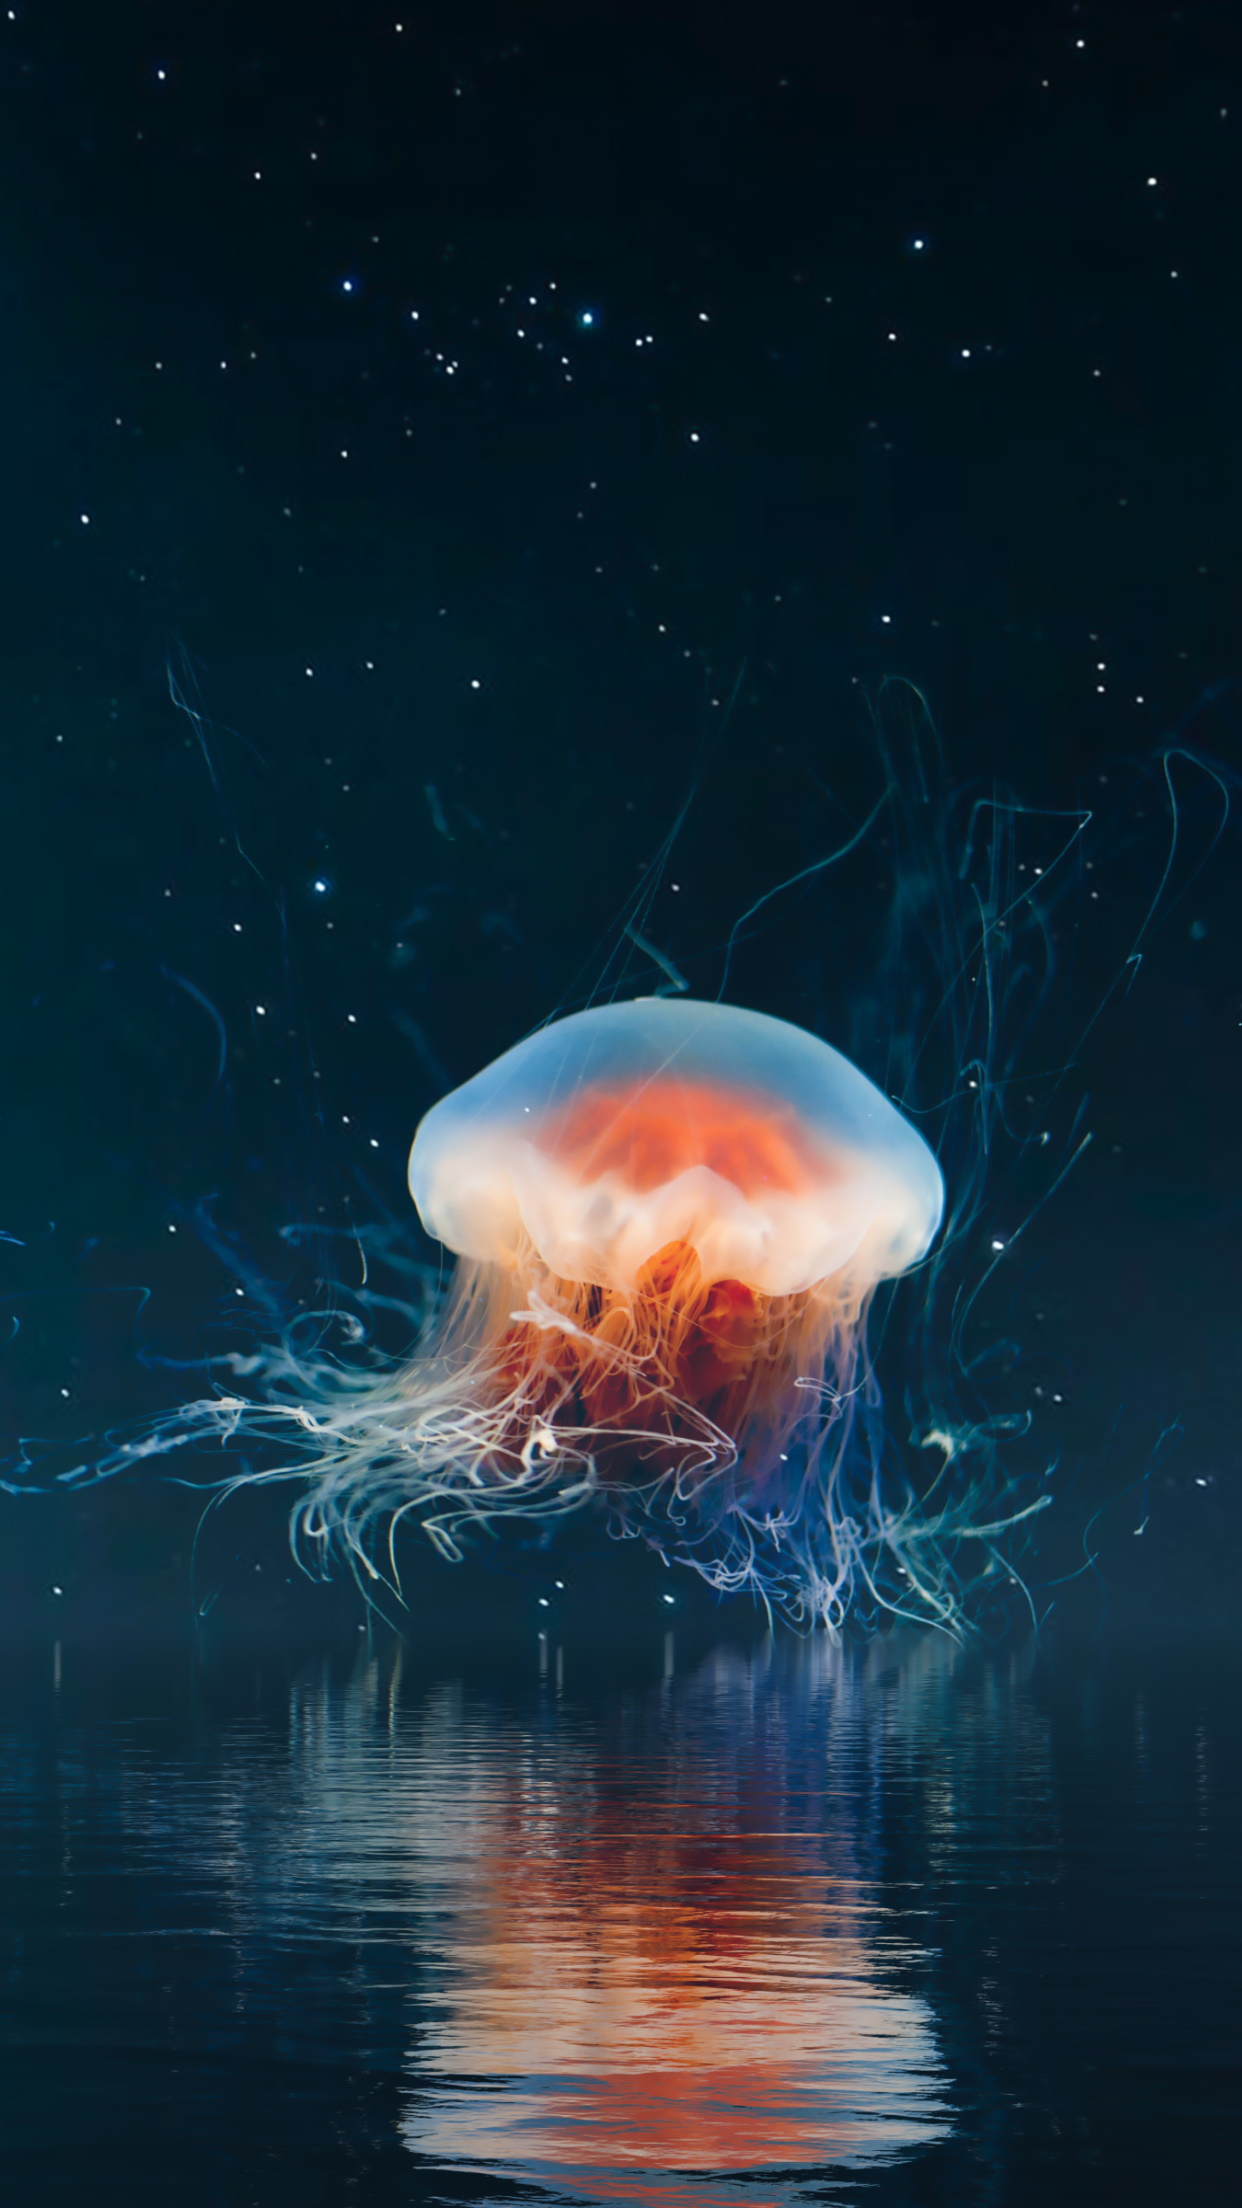 Jellyfish on the night sky wallpaper 1242x2208